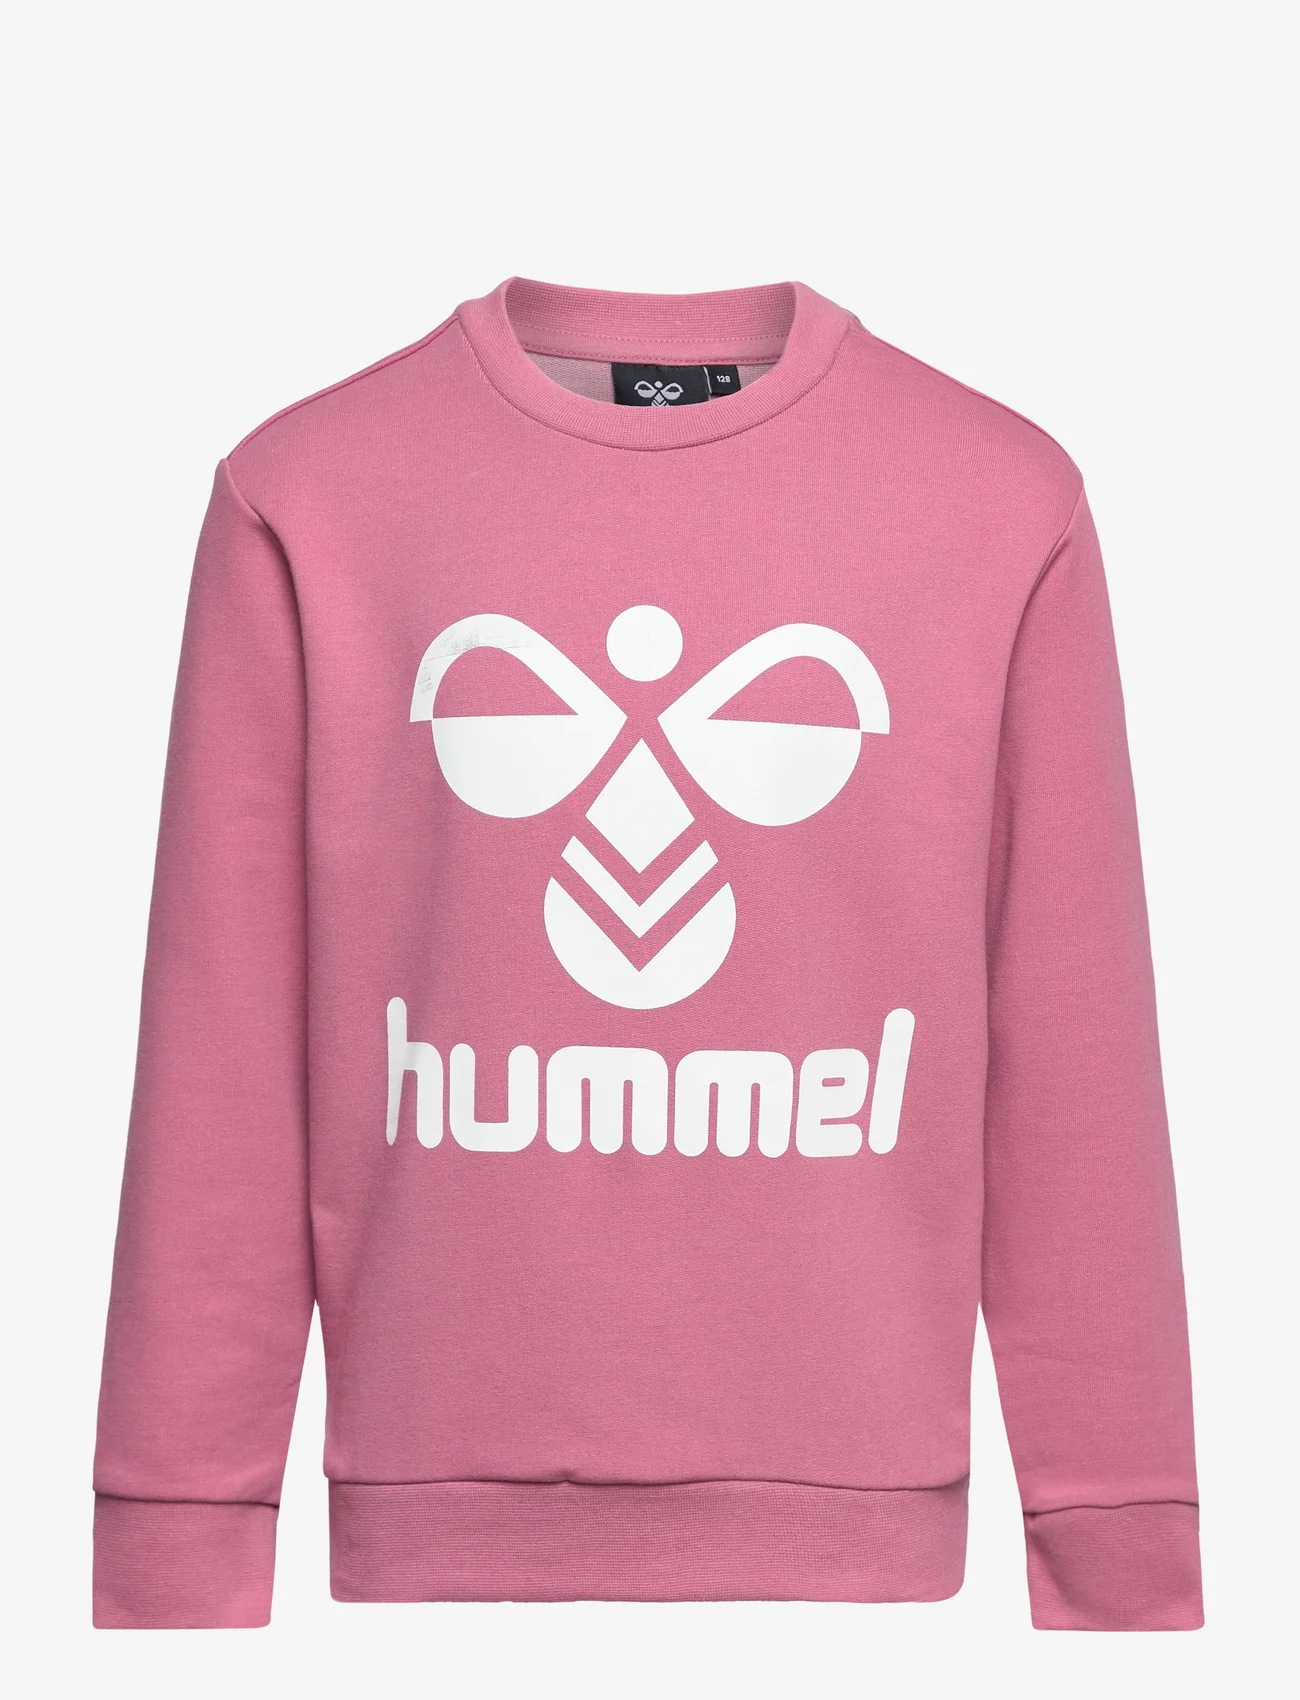 Hummel - hmlDOS SWEATSHIRT - sweatshirts & hættetrøjer - heather rose - 0